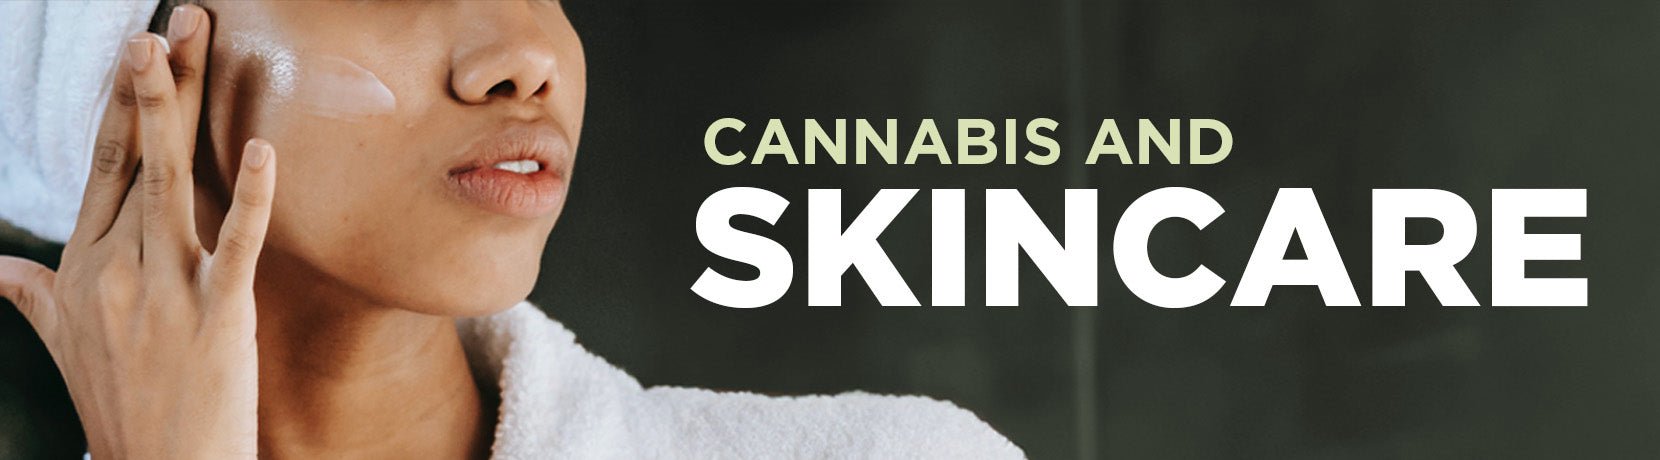 Cannabis and Skincare - Shop CBD Kratom